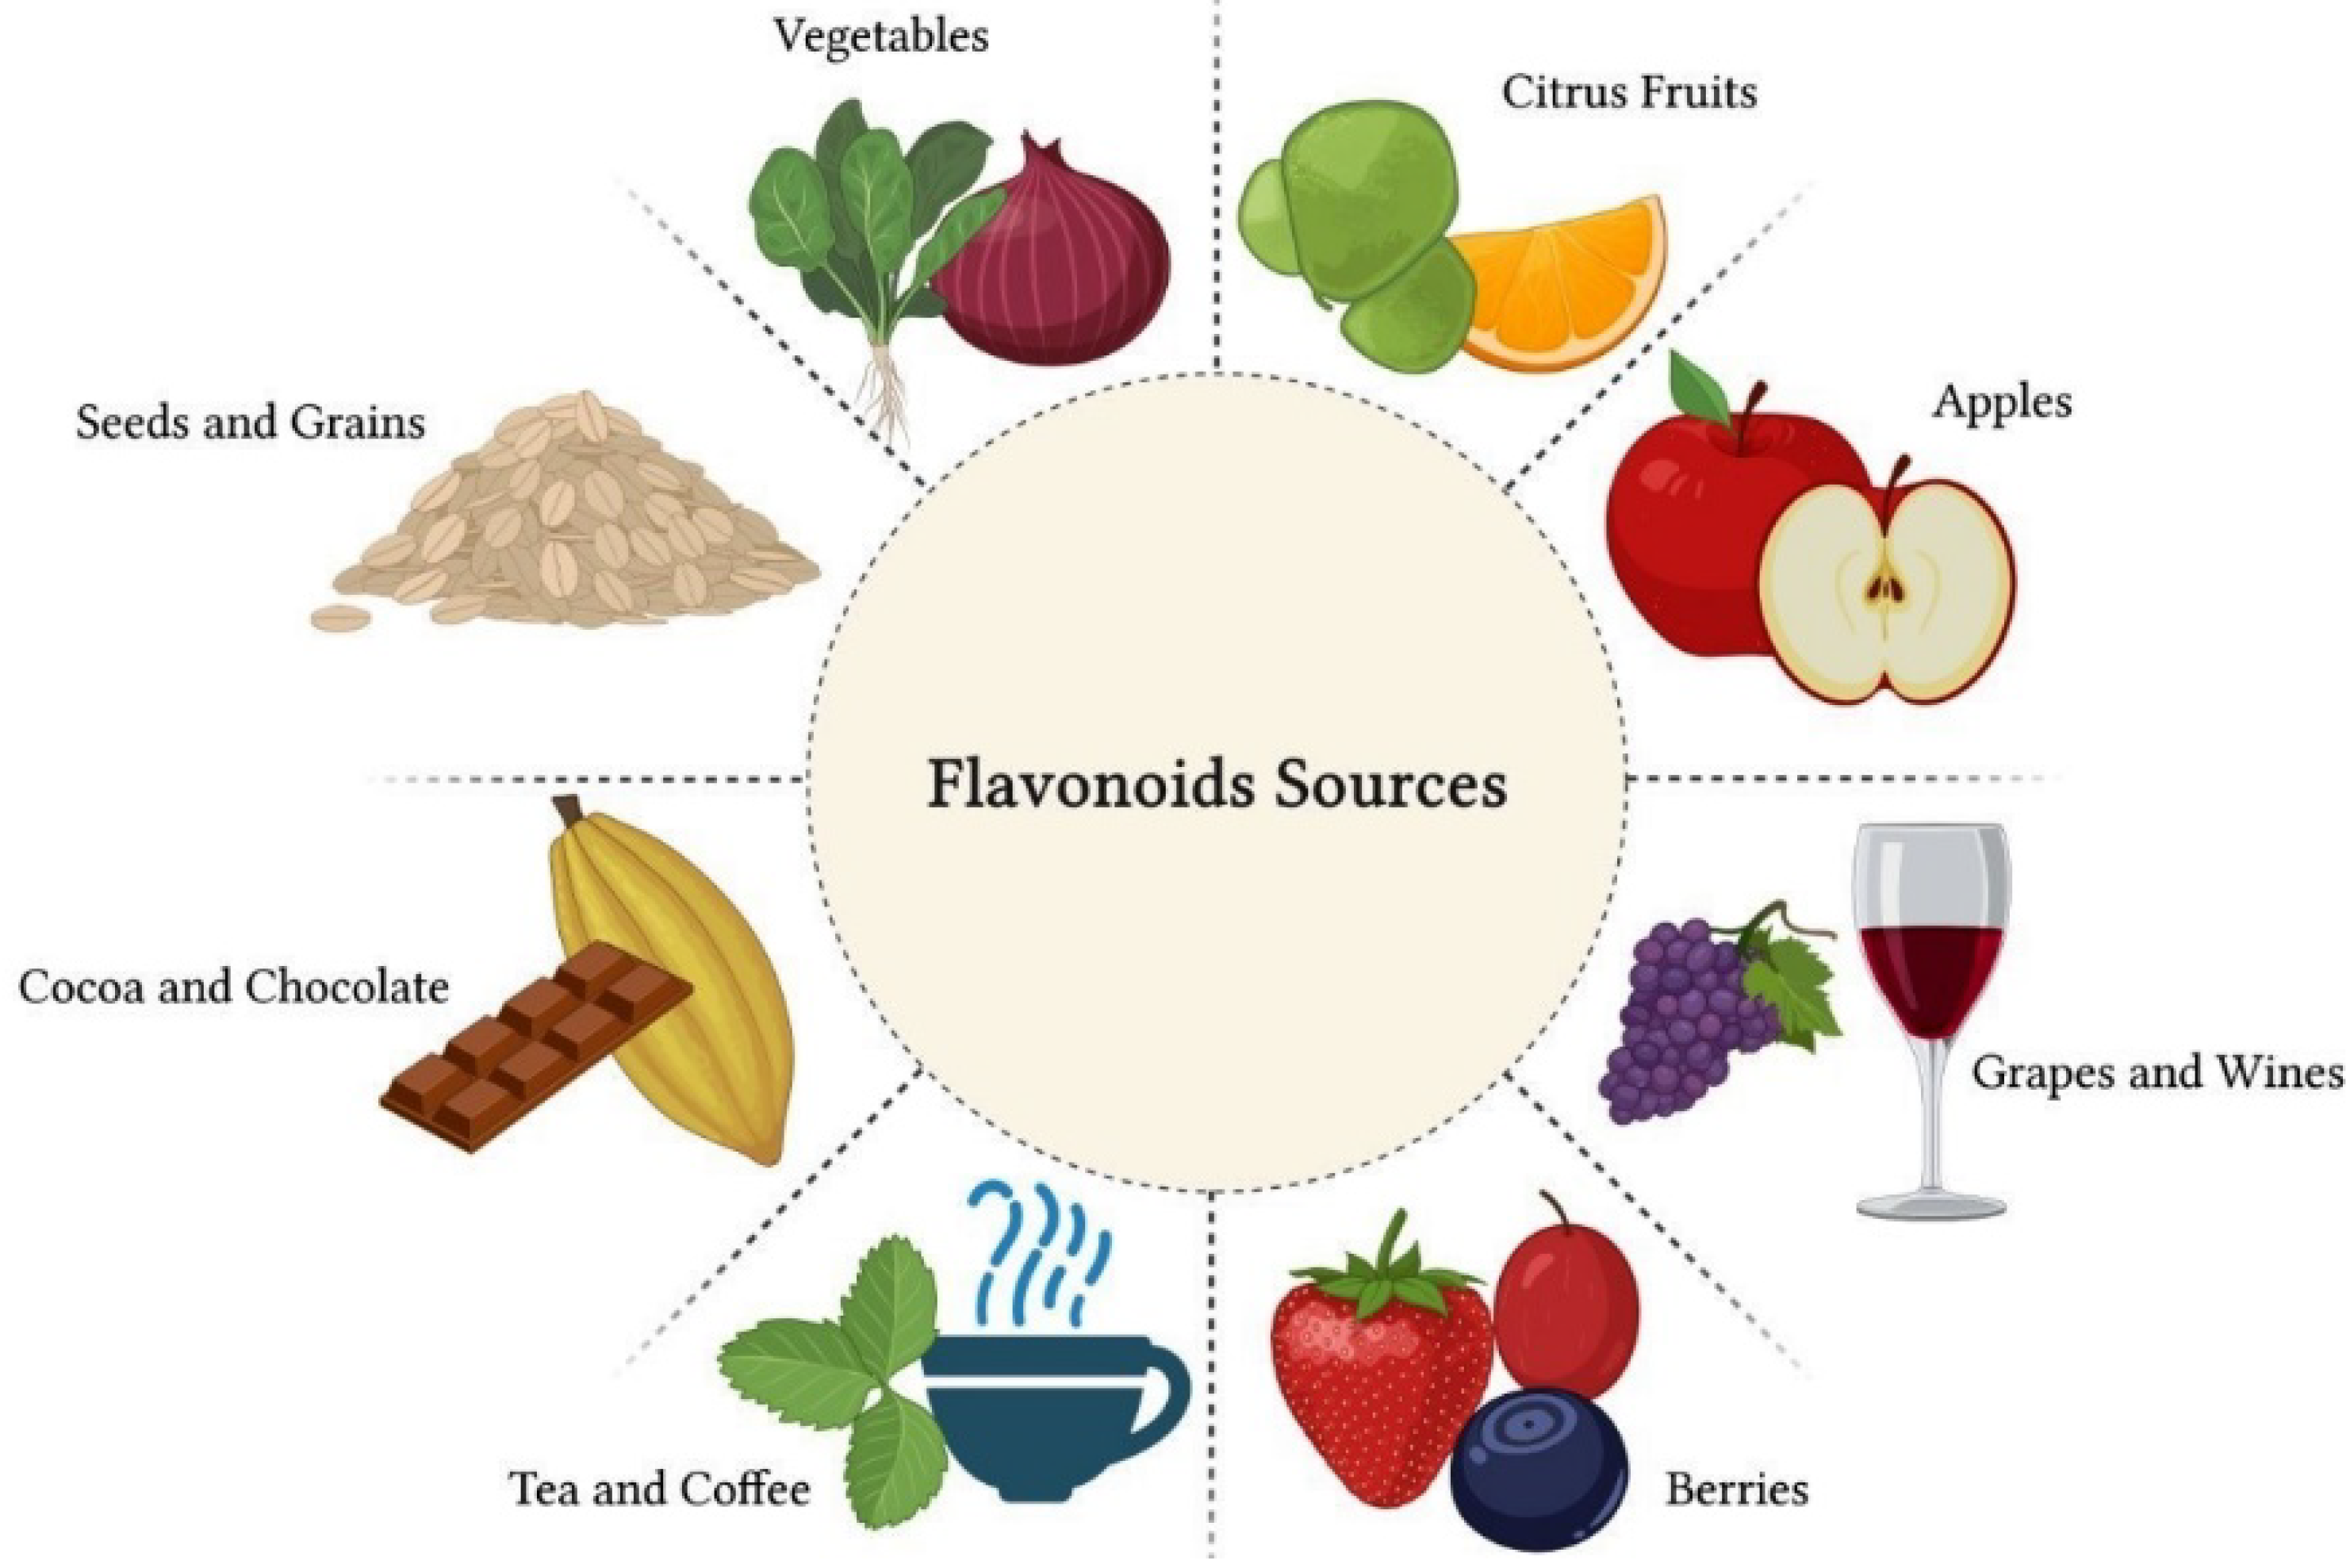 Flavonoids in vegetables